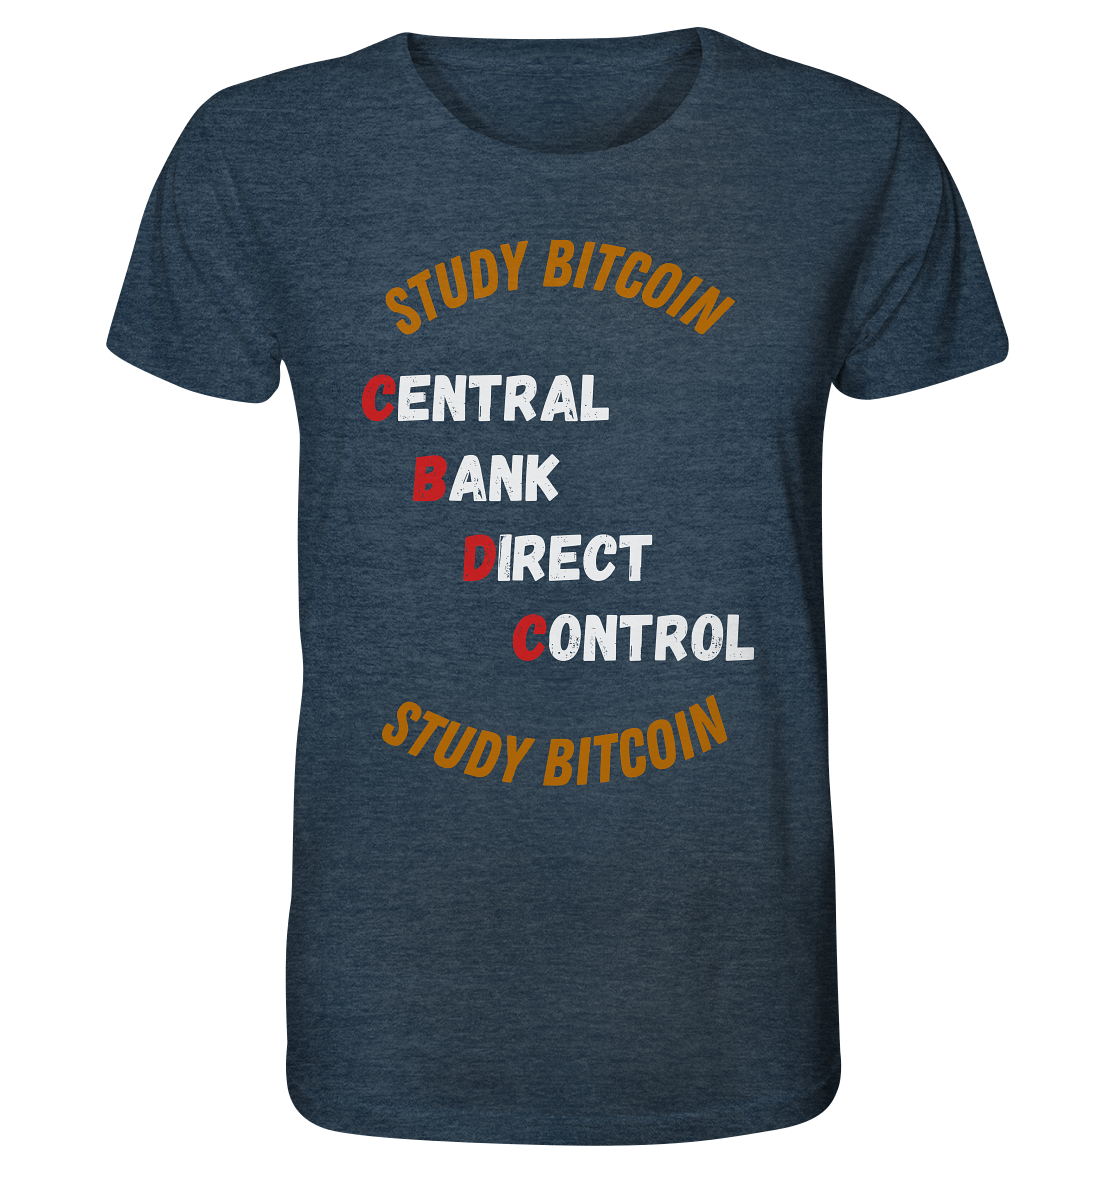 CENTRAL BANK DIRECT CONTROL - STUDY BITCOIN   - Organic Shirt (meliert)